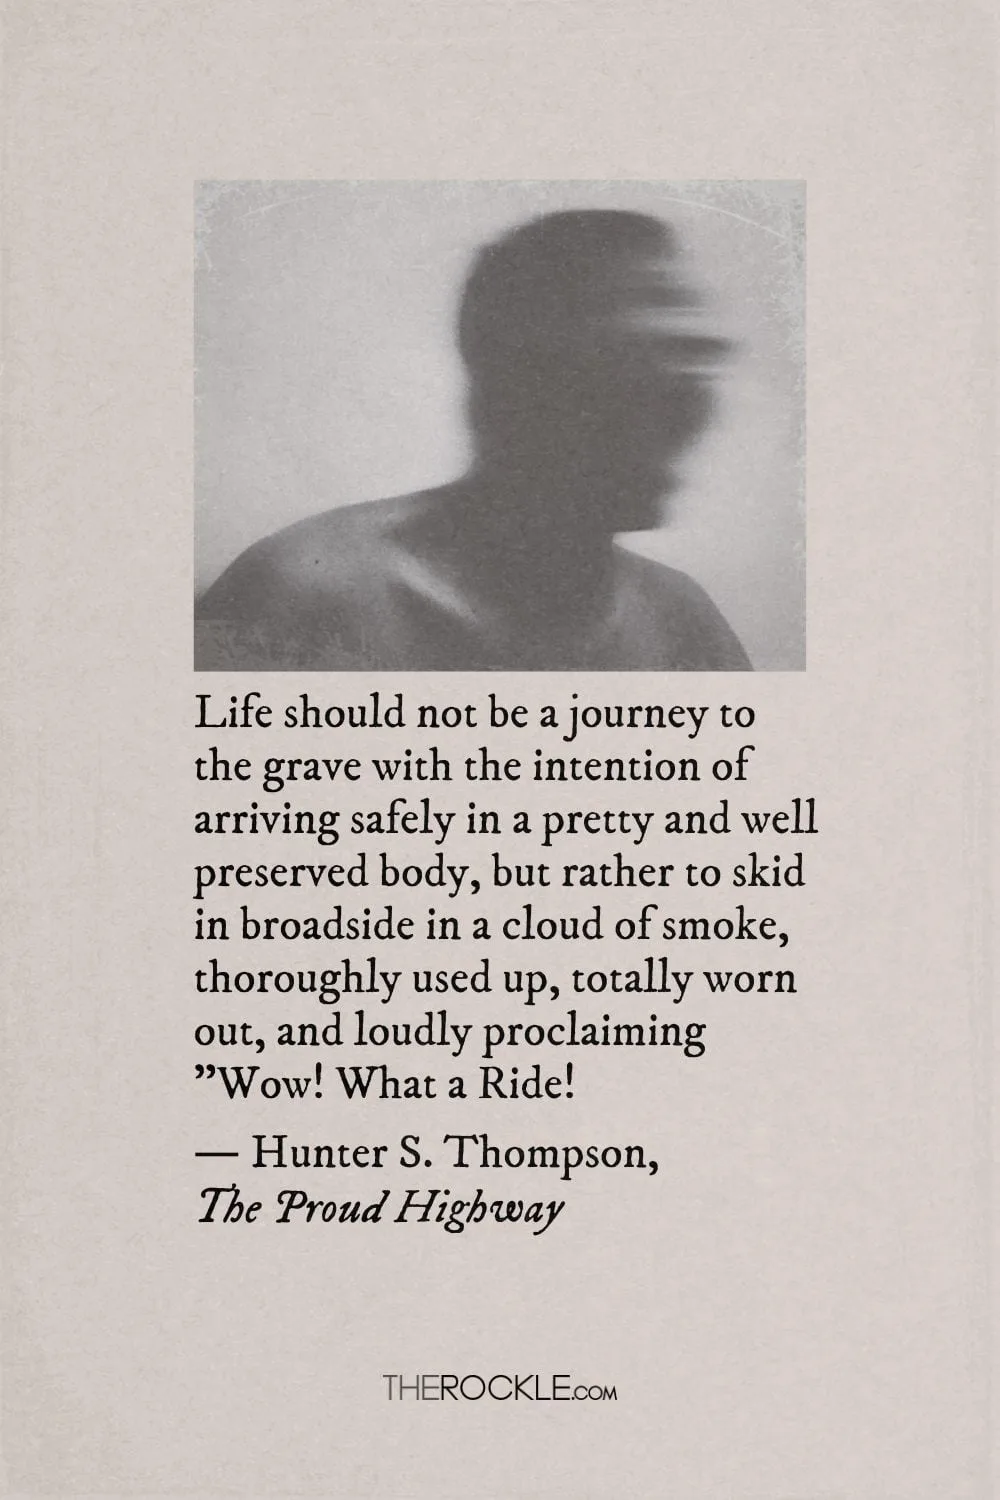 Hunter S. Thompson on living an adventurous life